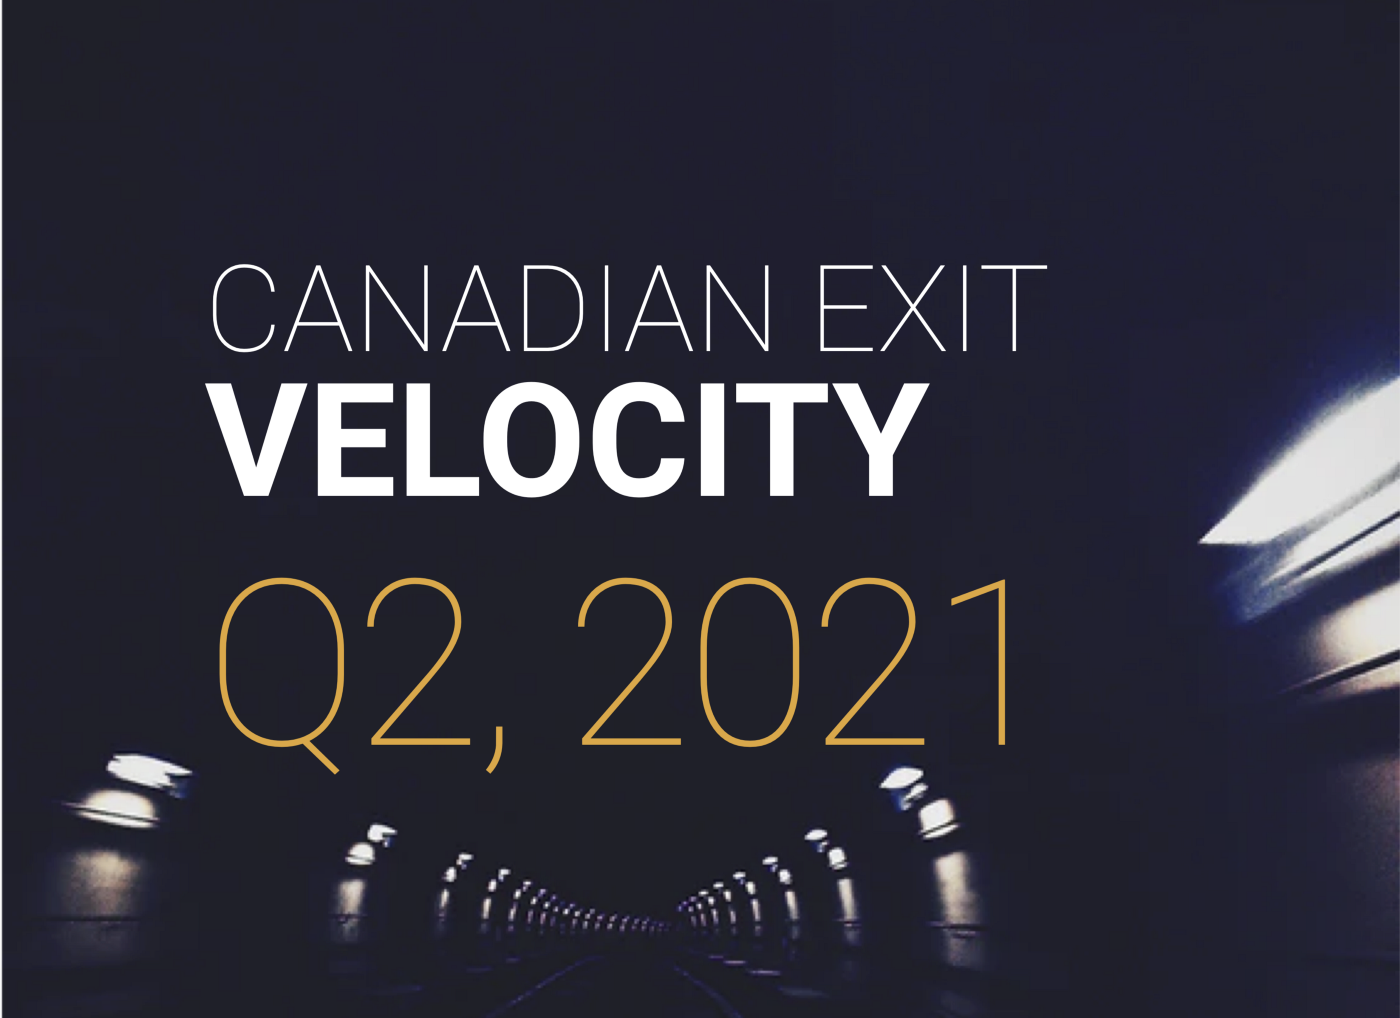 Canadian exit velocity reflects market momentum